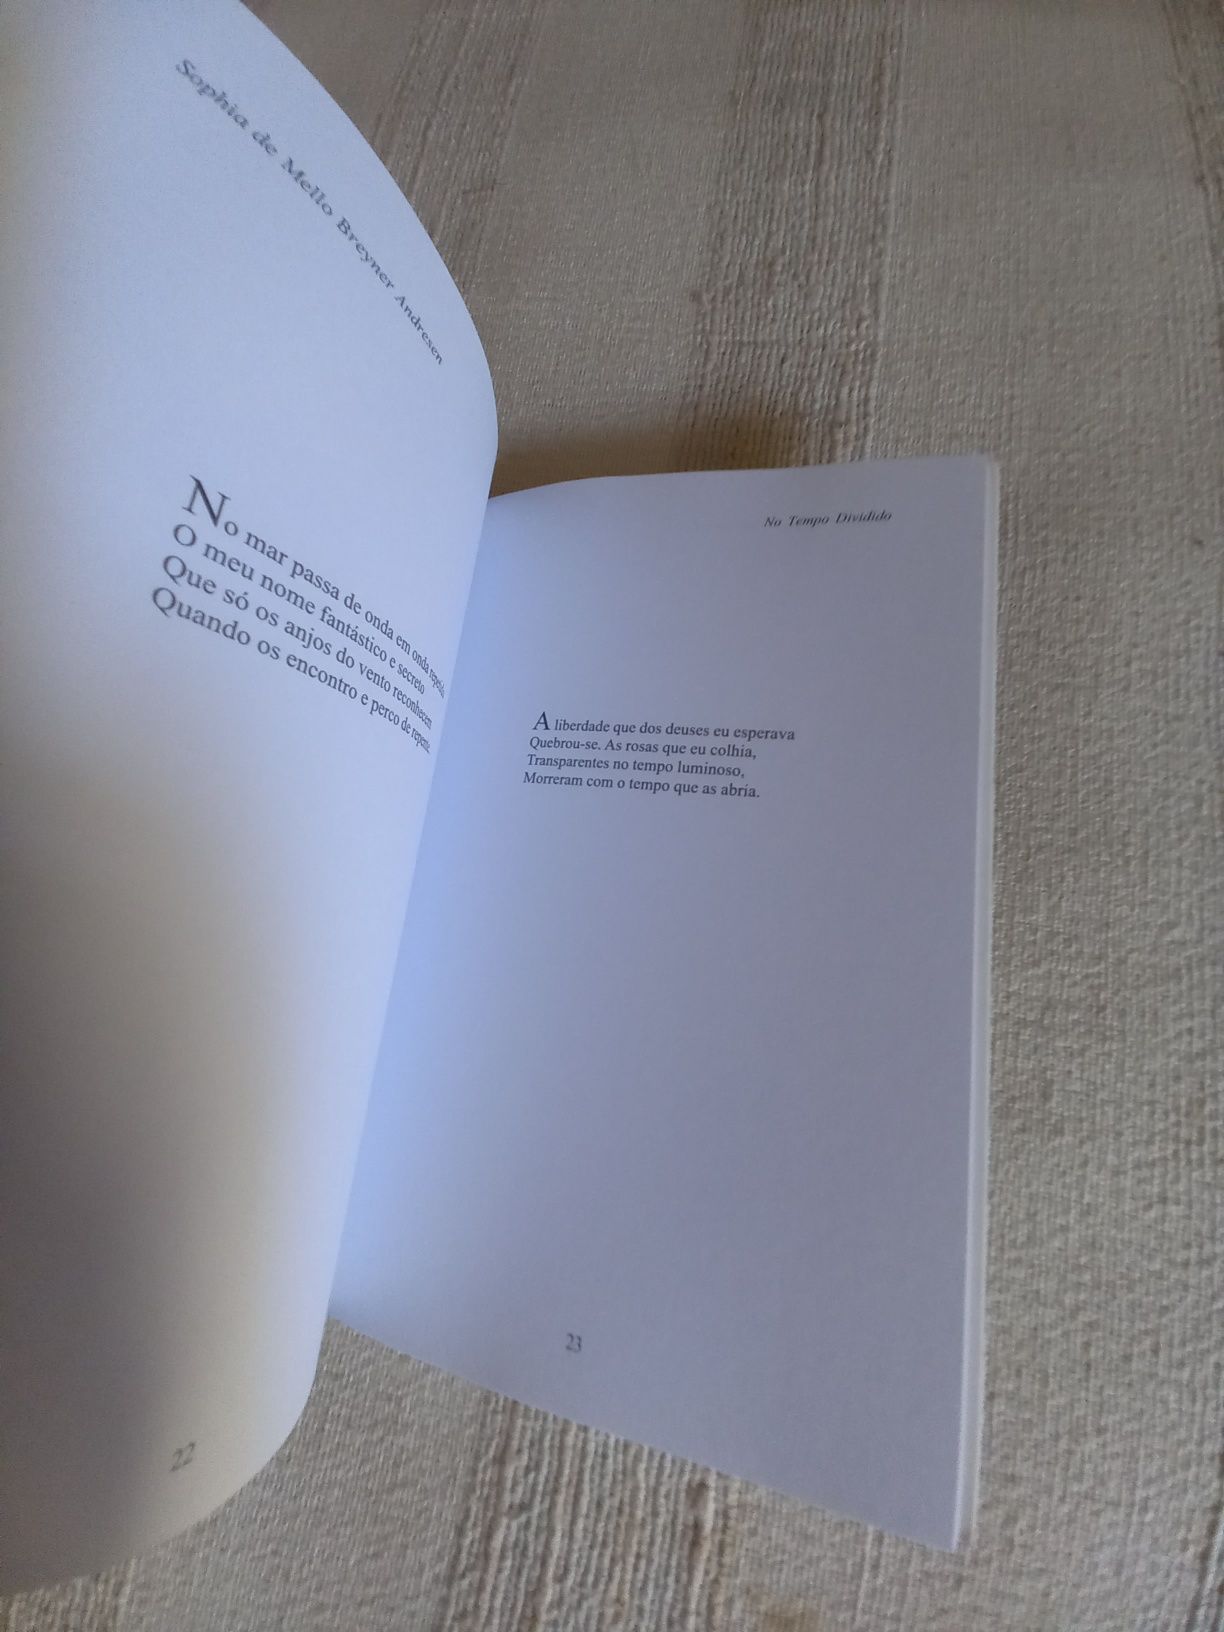 Livro de poesia de Sophia de Mello Breyner Andresen